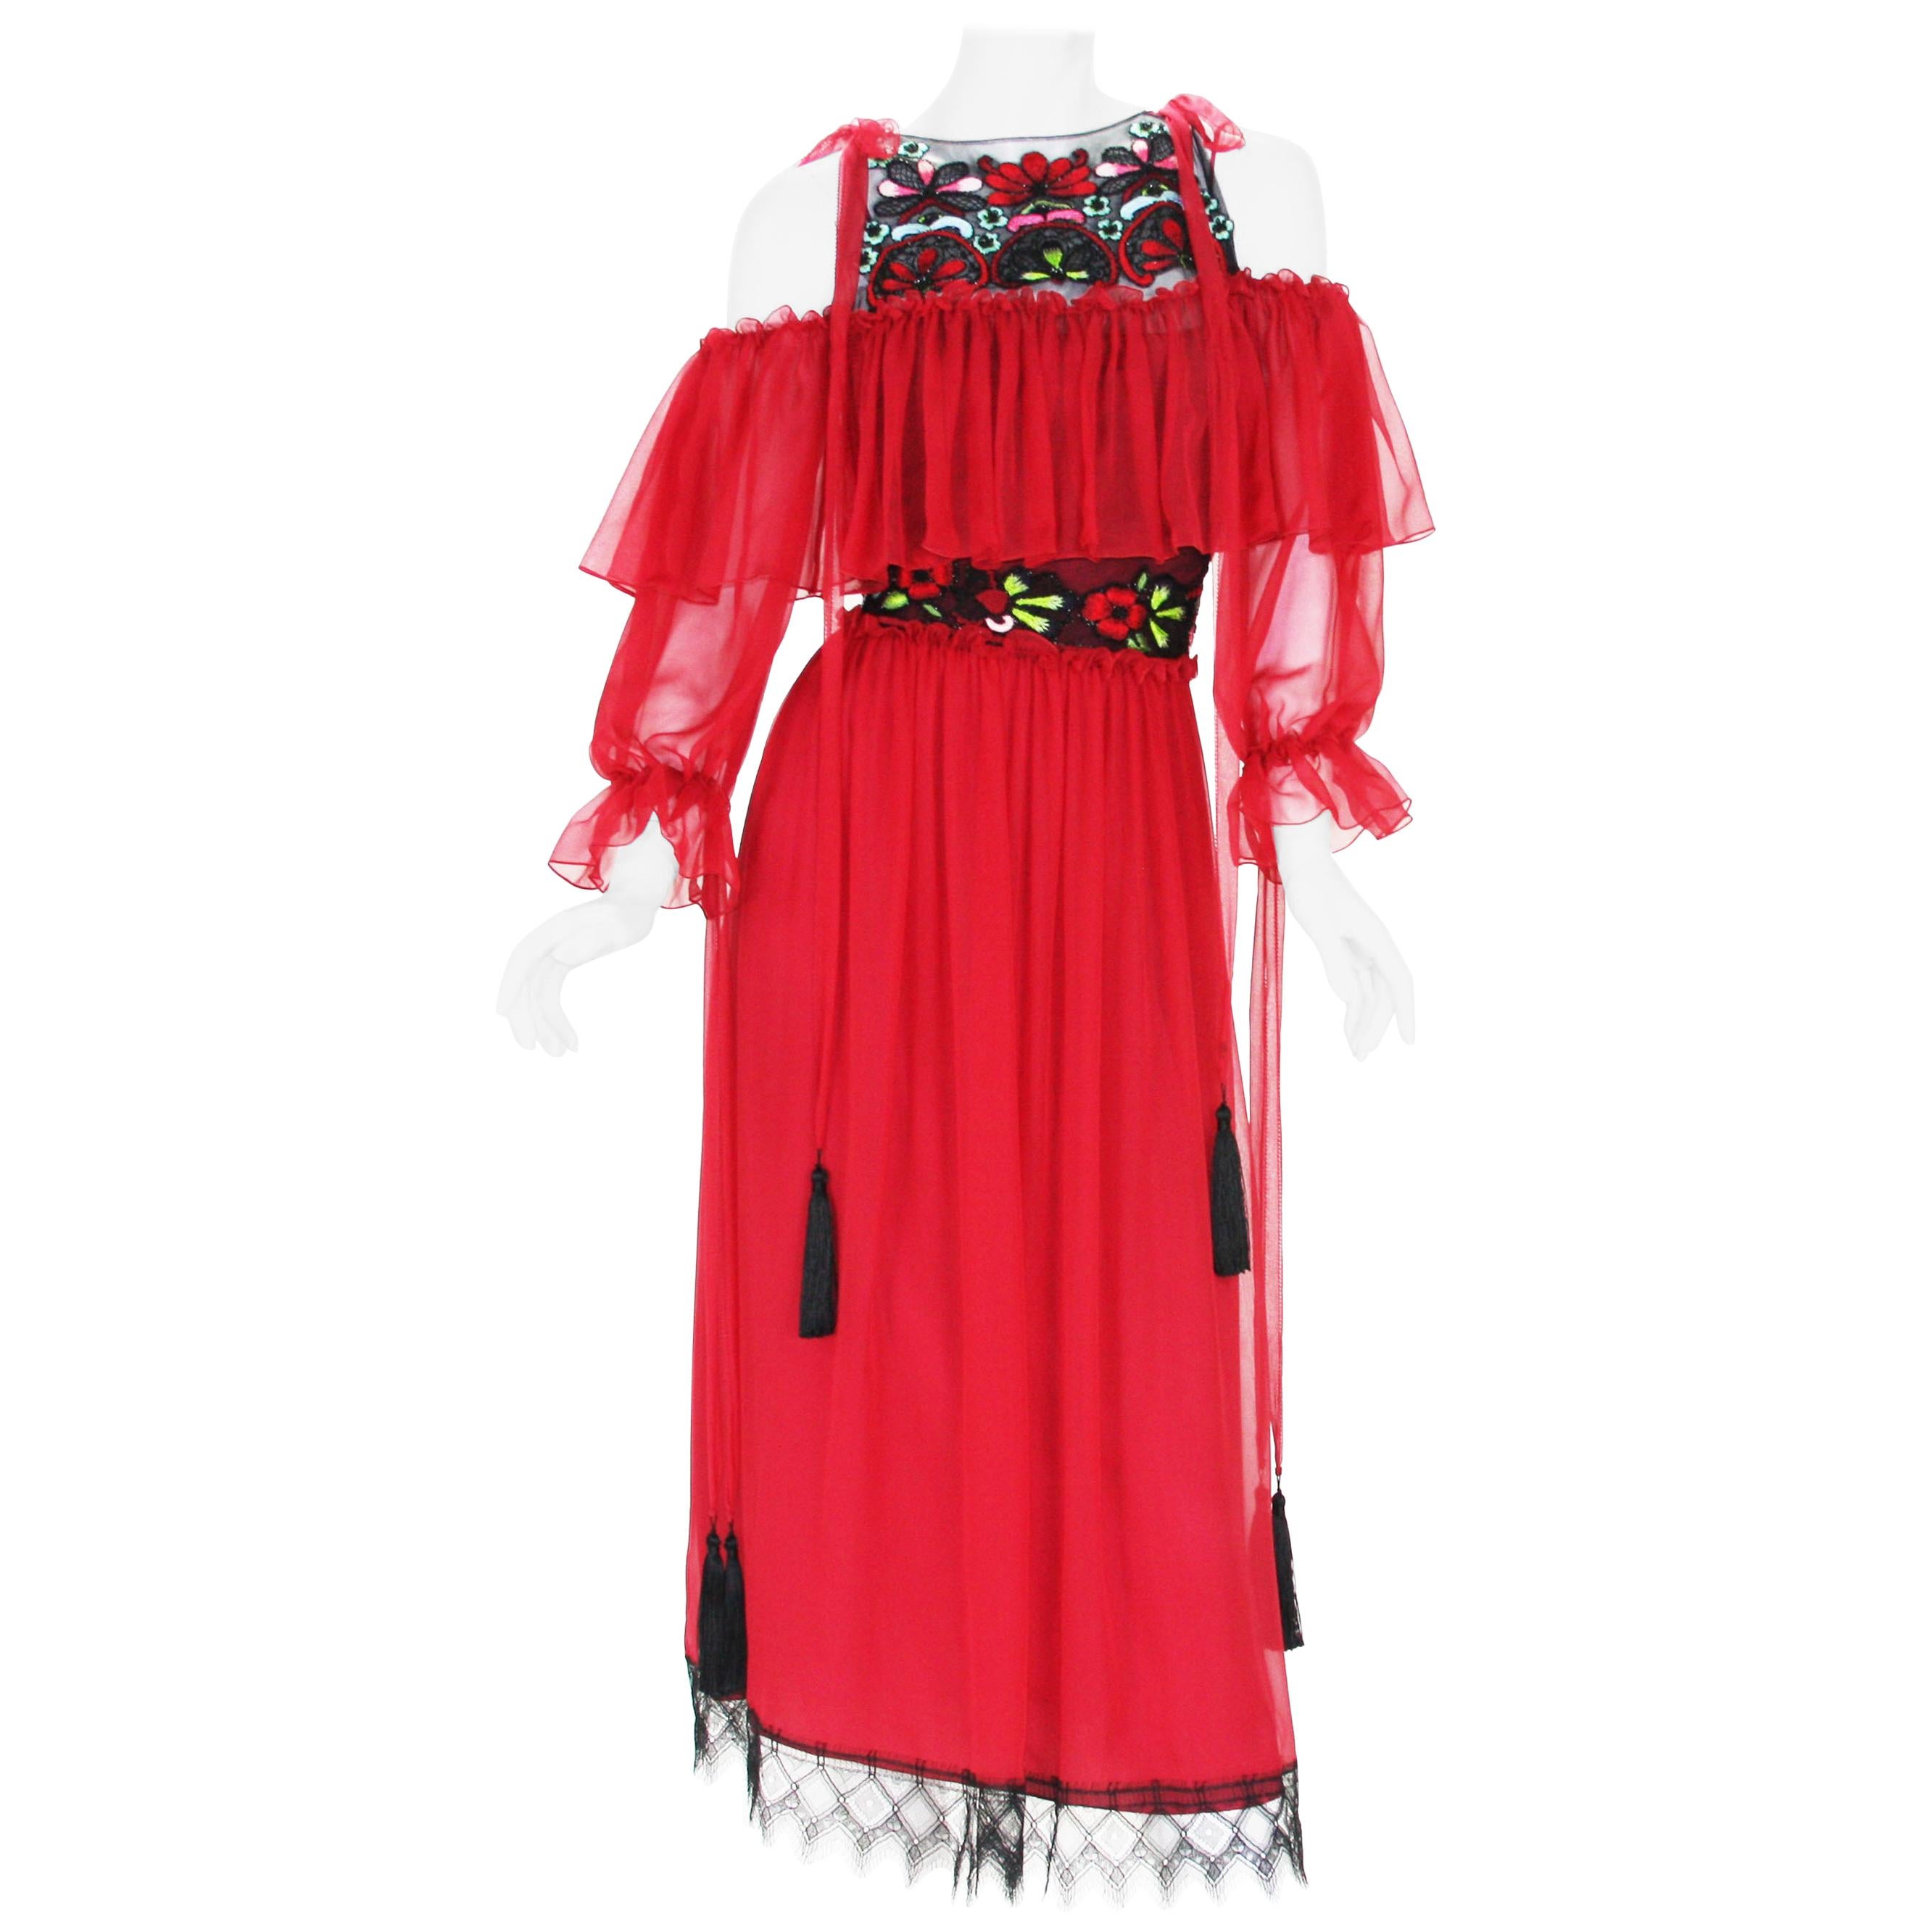 New Alberta Ferretti S/S 2017 Collection Red Silk Beaded Tassel Lace Long Dress 